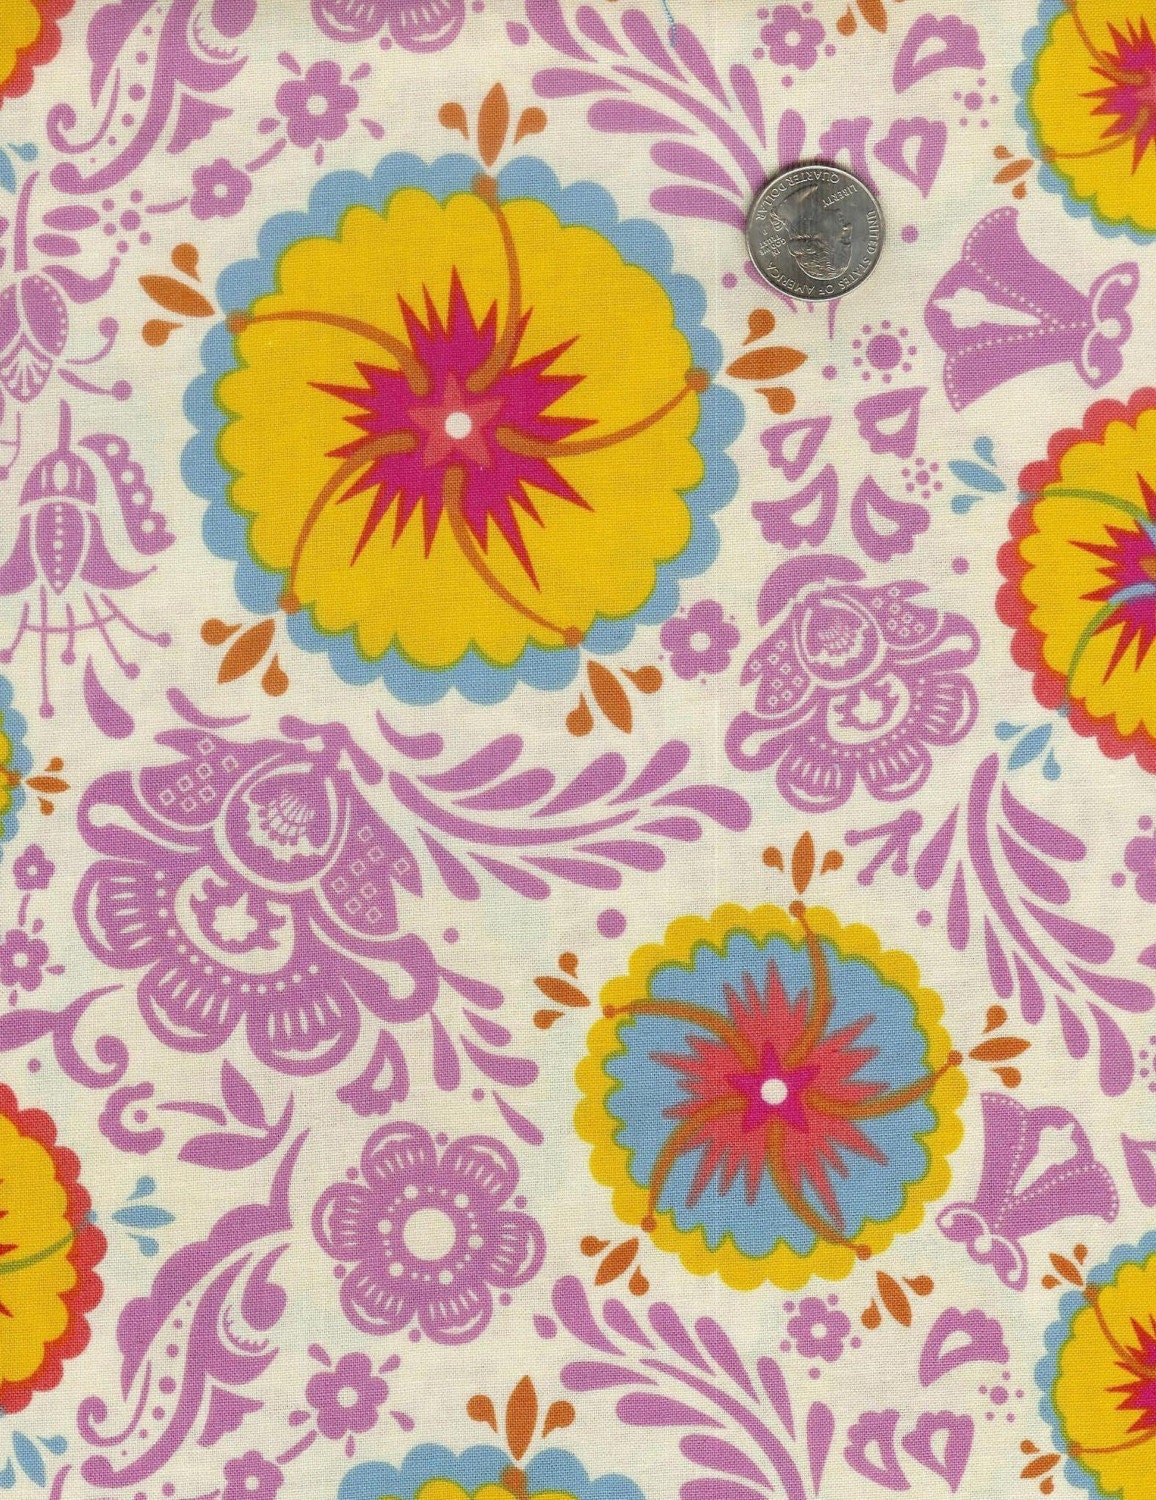 NEW - Fat quarter - Anna Maria Horner Good Folks - Fortune in Sun - cotton quilt fabric